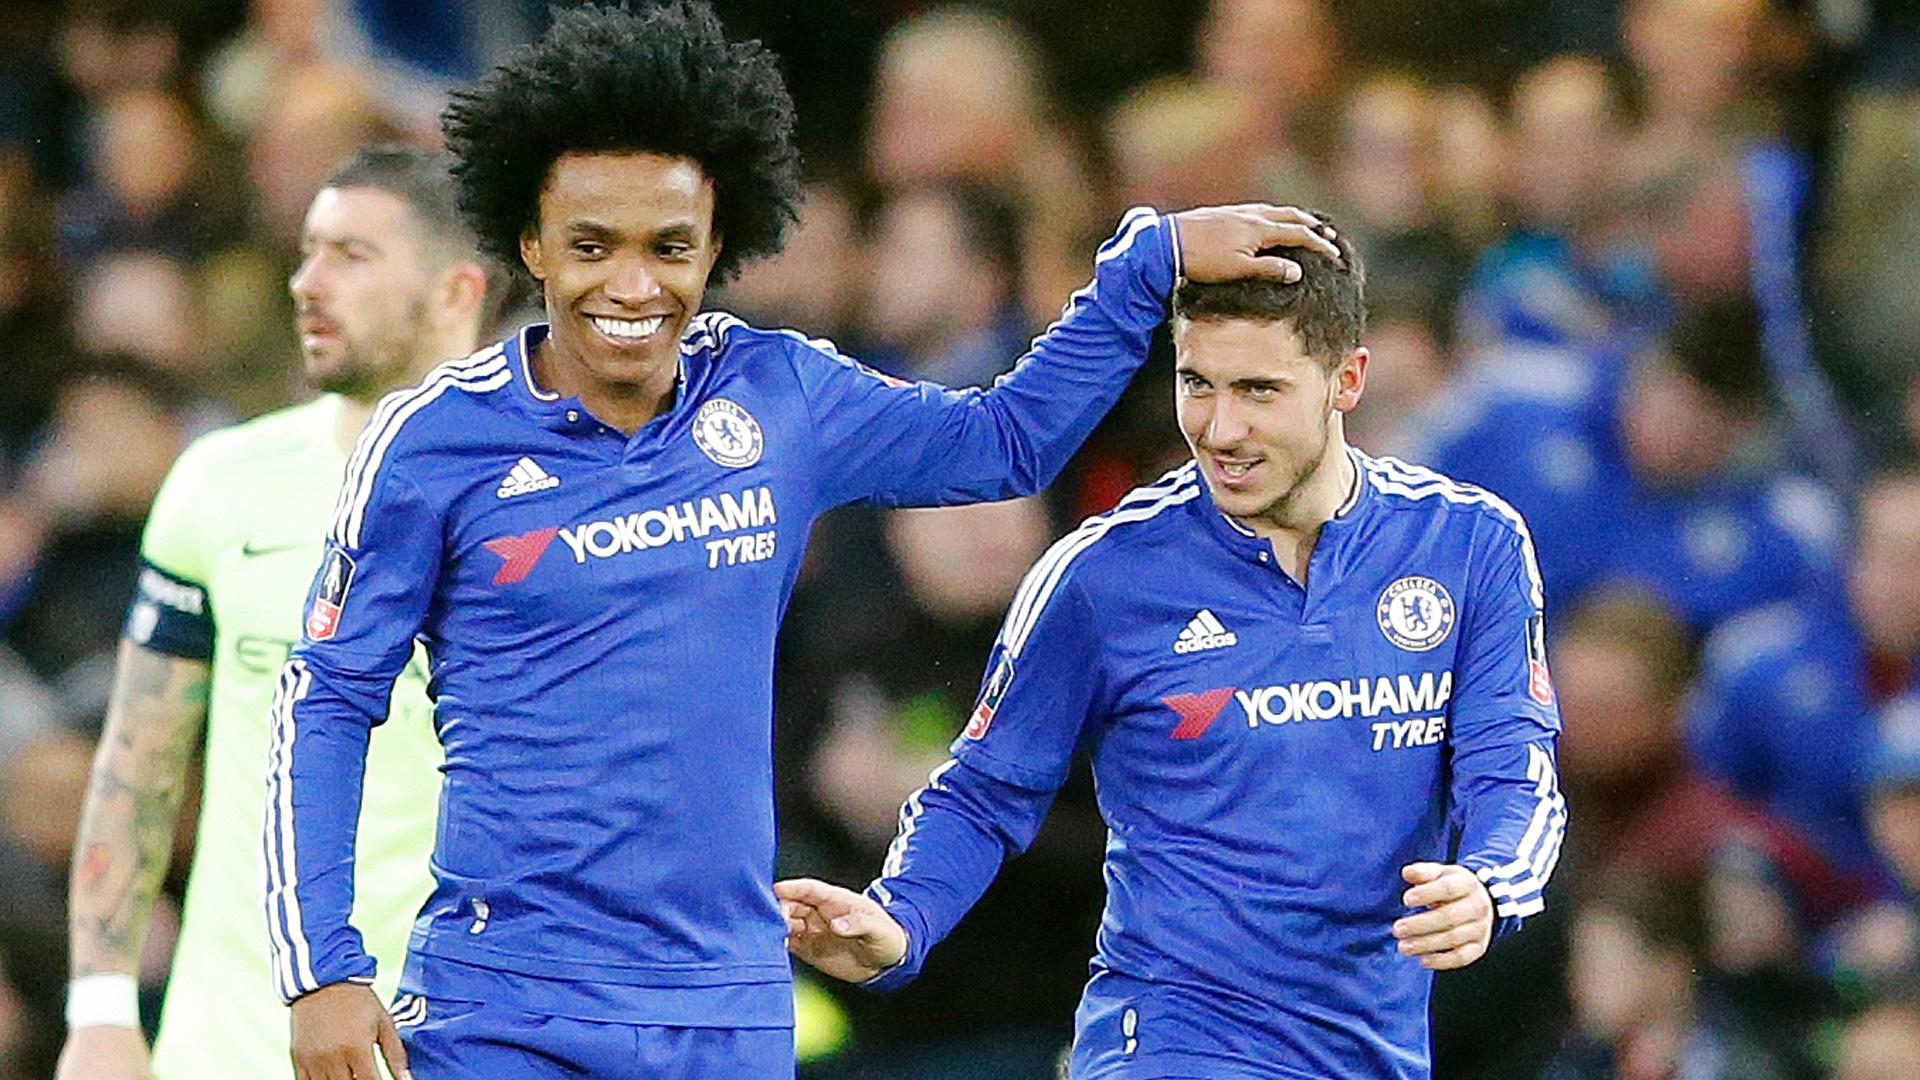 No mercy' for Chelsea friend Hazard: Willian News, Odisha